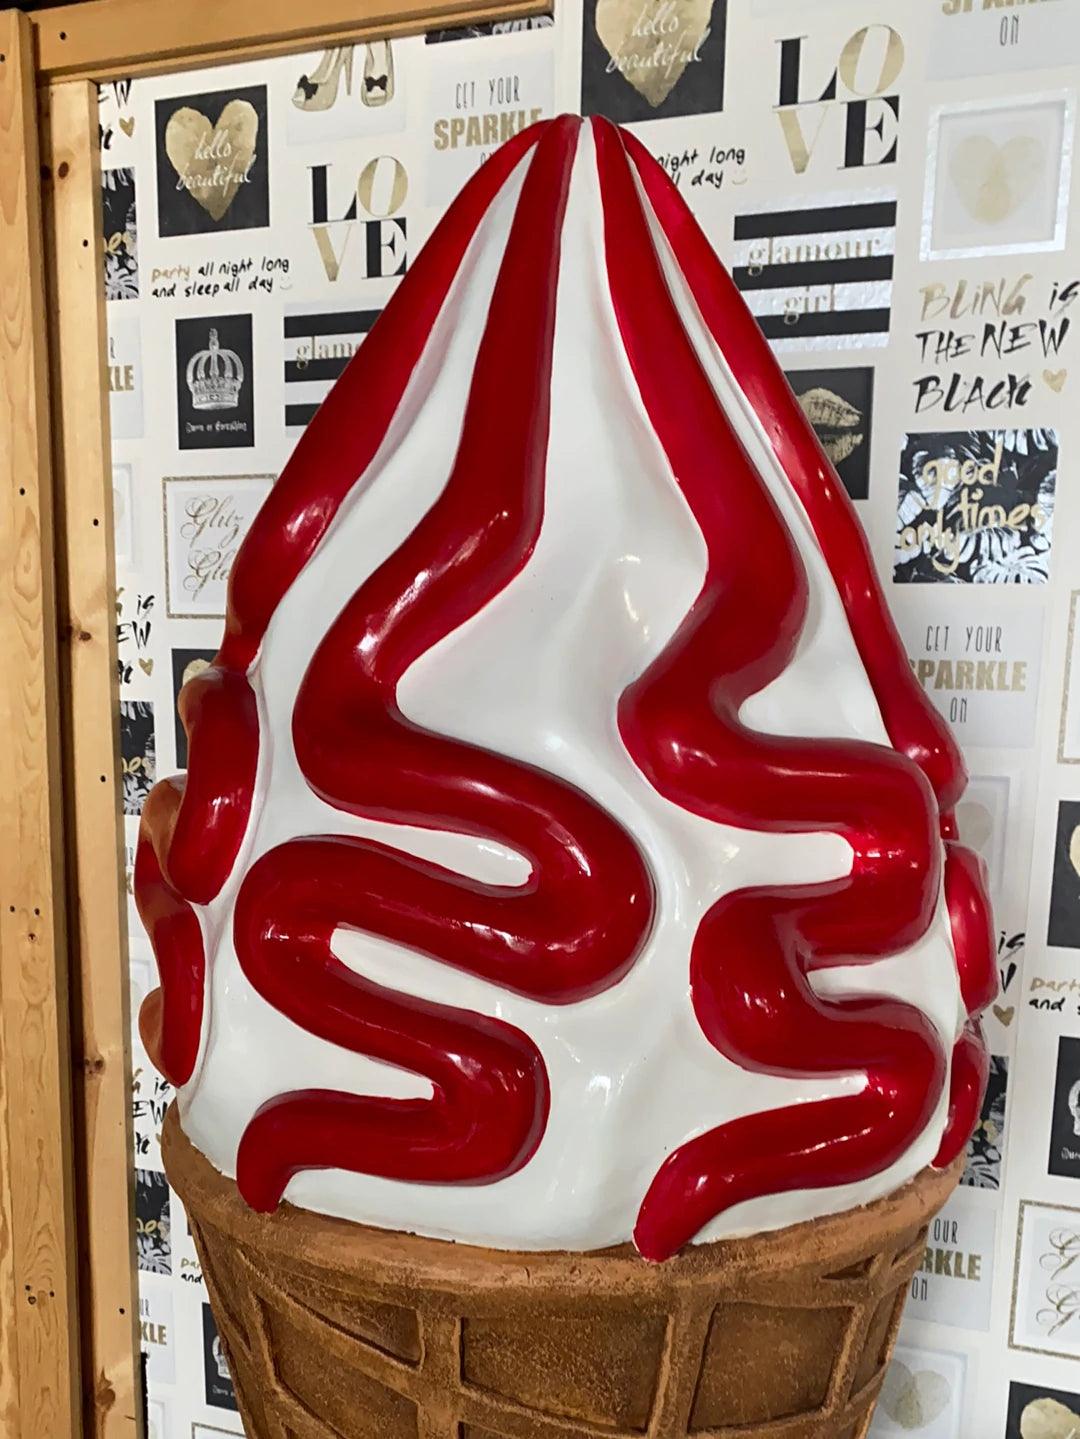 Strawberry Ice Cream Statue - LM Treasures Prop Rentals 